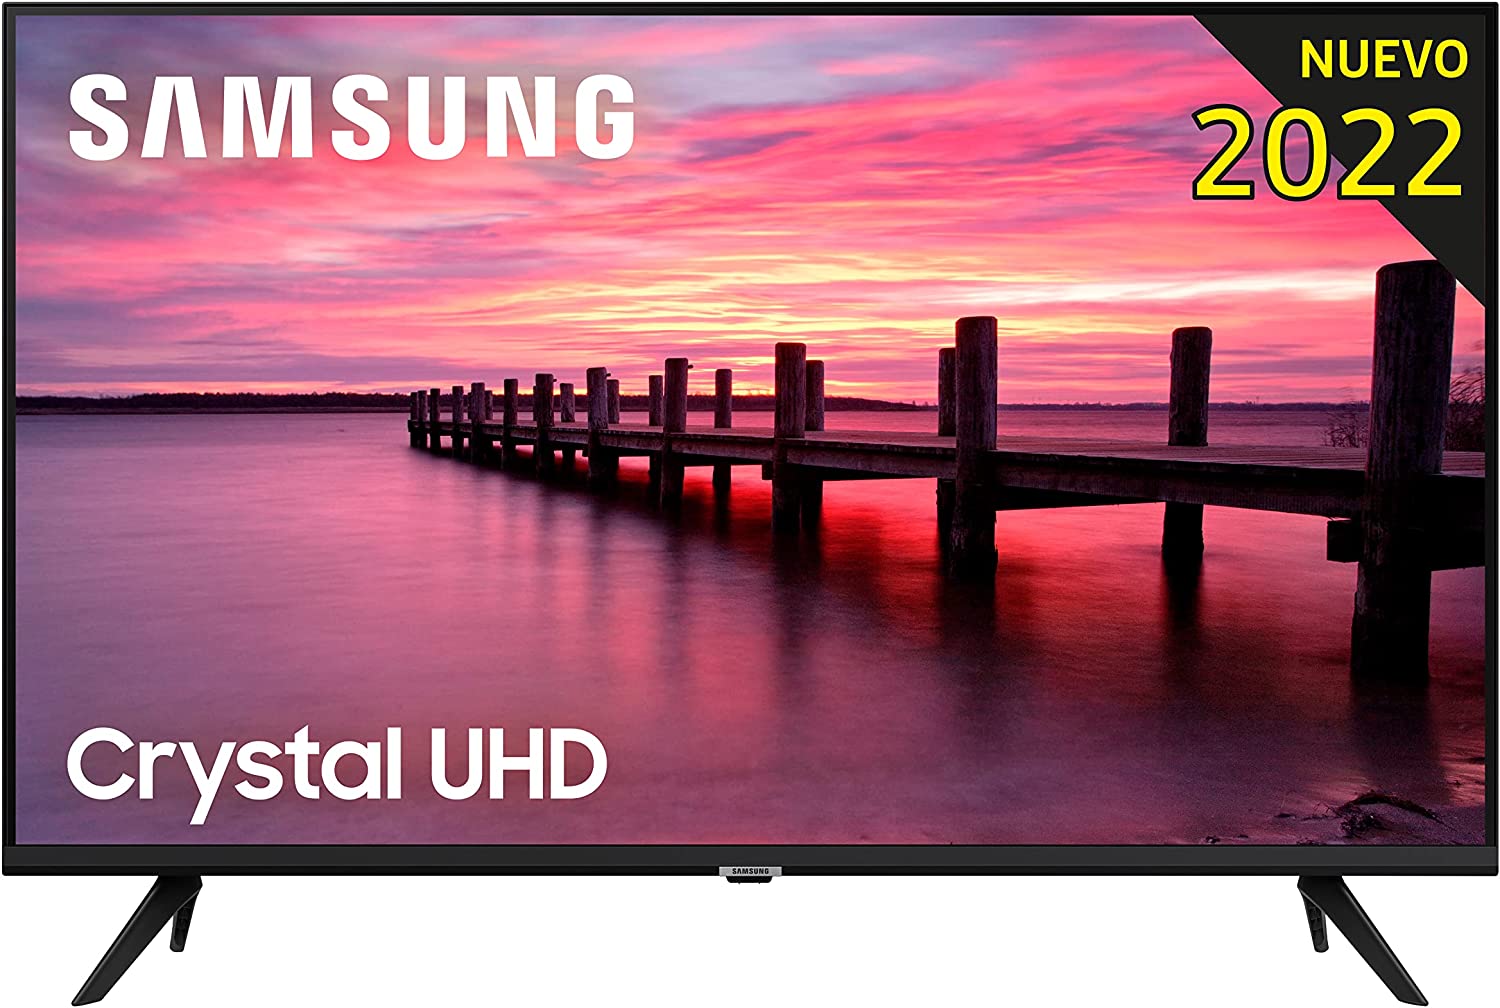 Samsung Crystal UHD 2022